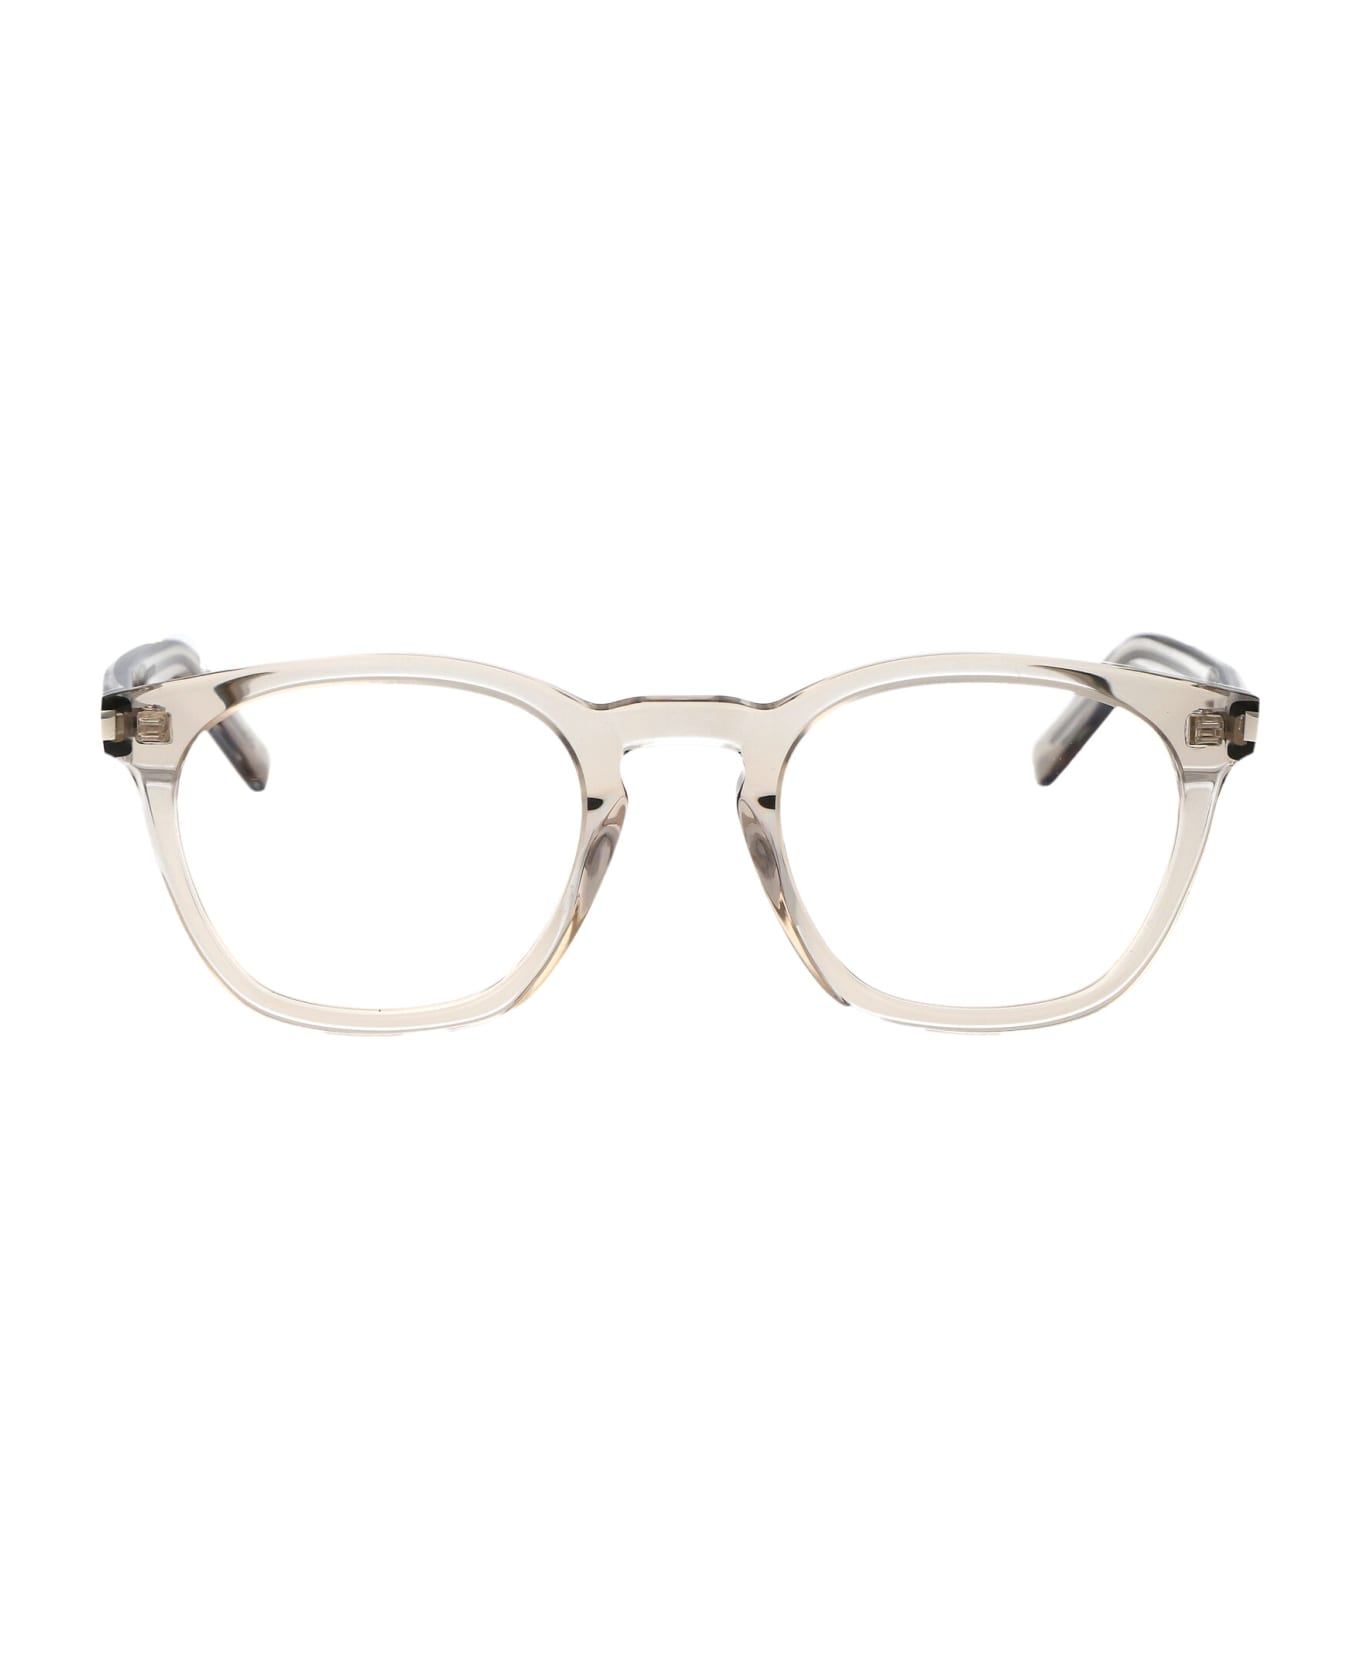 Saint Laurent Eyewear Sl 28 Opt Glasses - 005 BEIGE BEIGE TRANSPARENT アイウェア